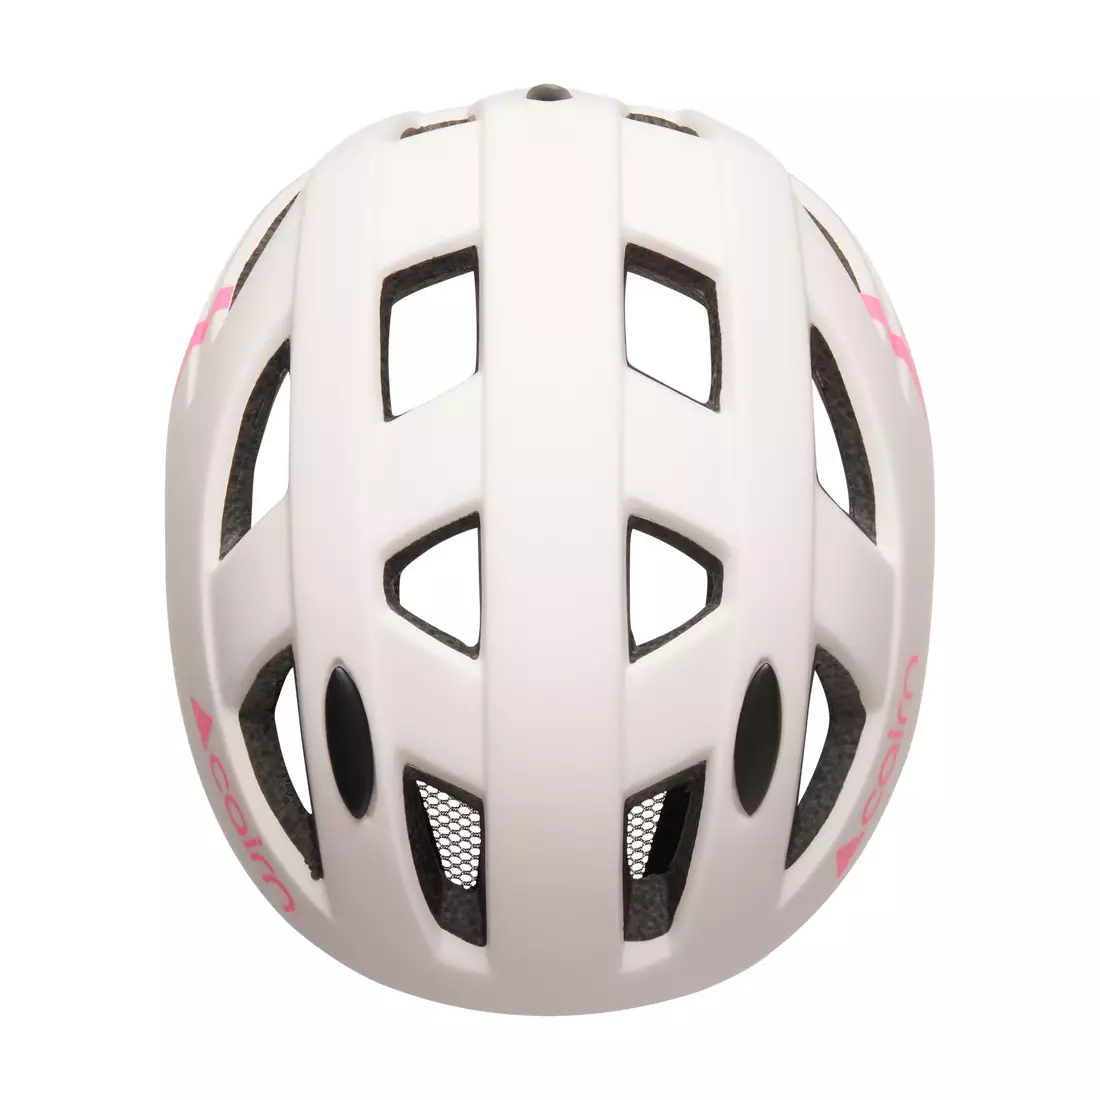 CAIRN cyklistická helma R KUSTOM white